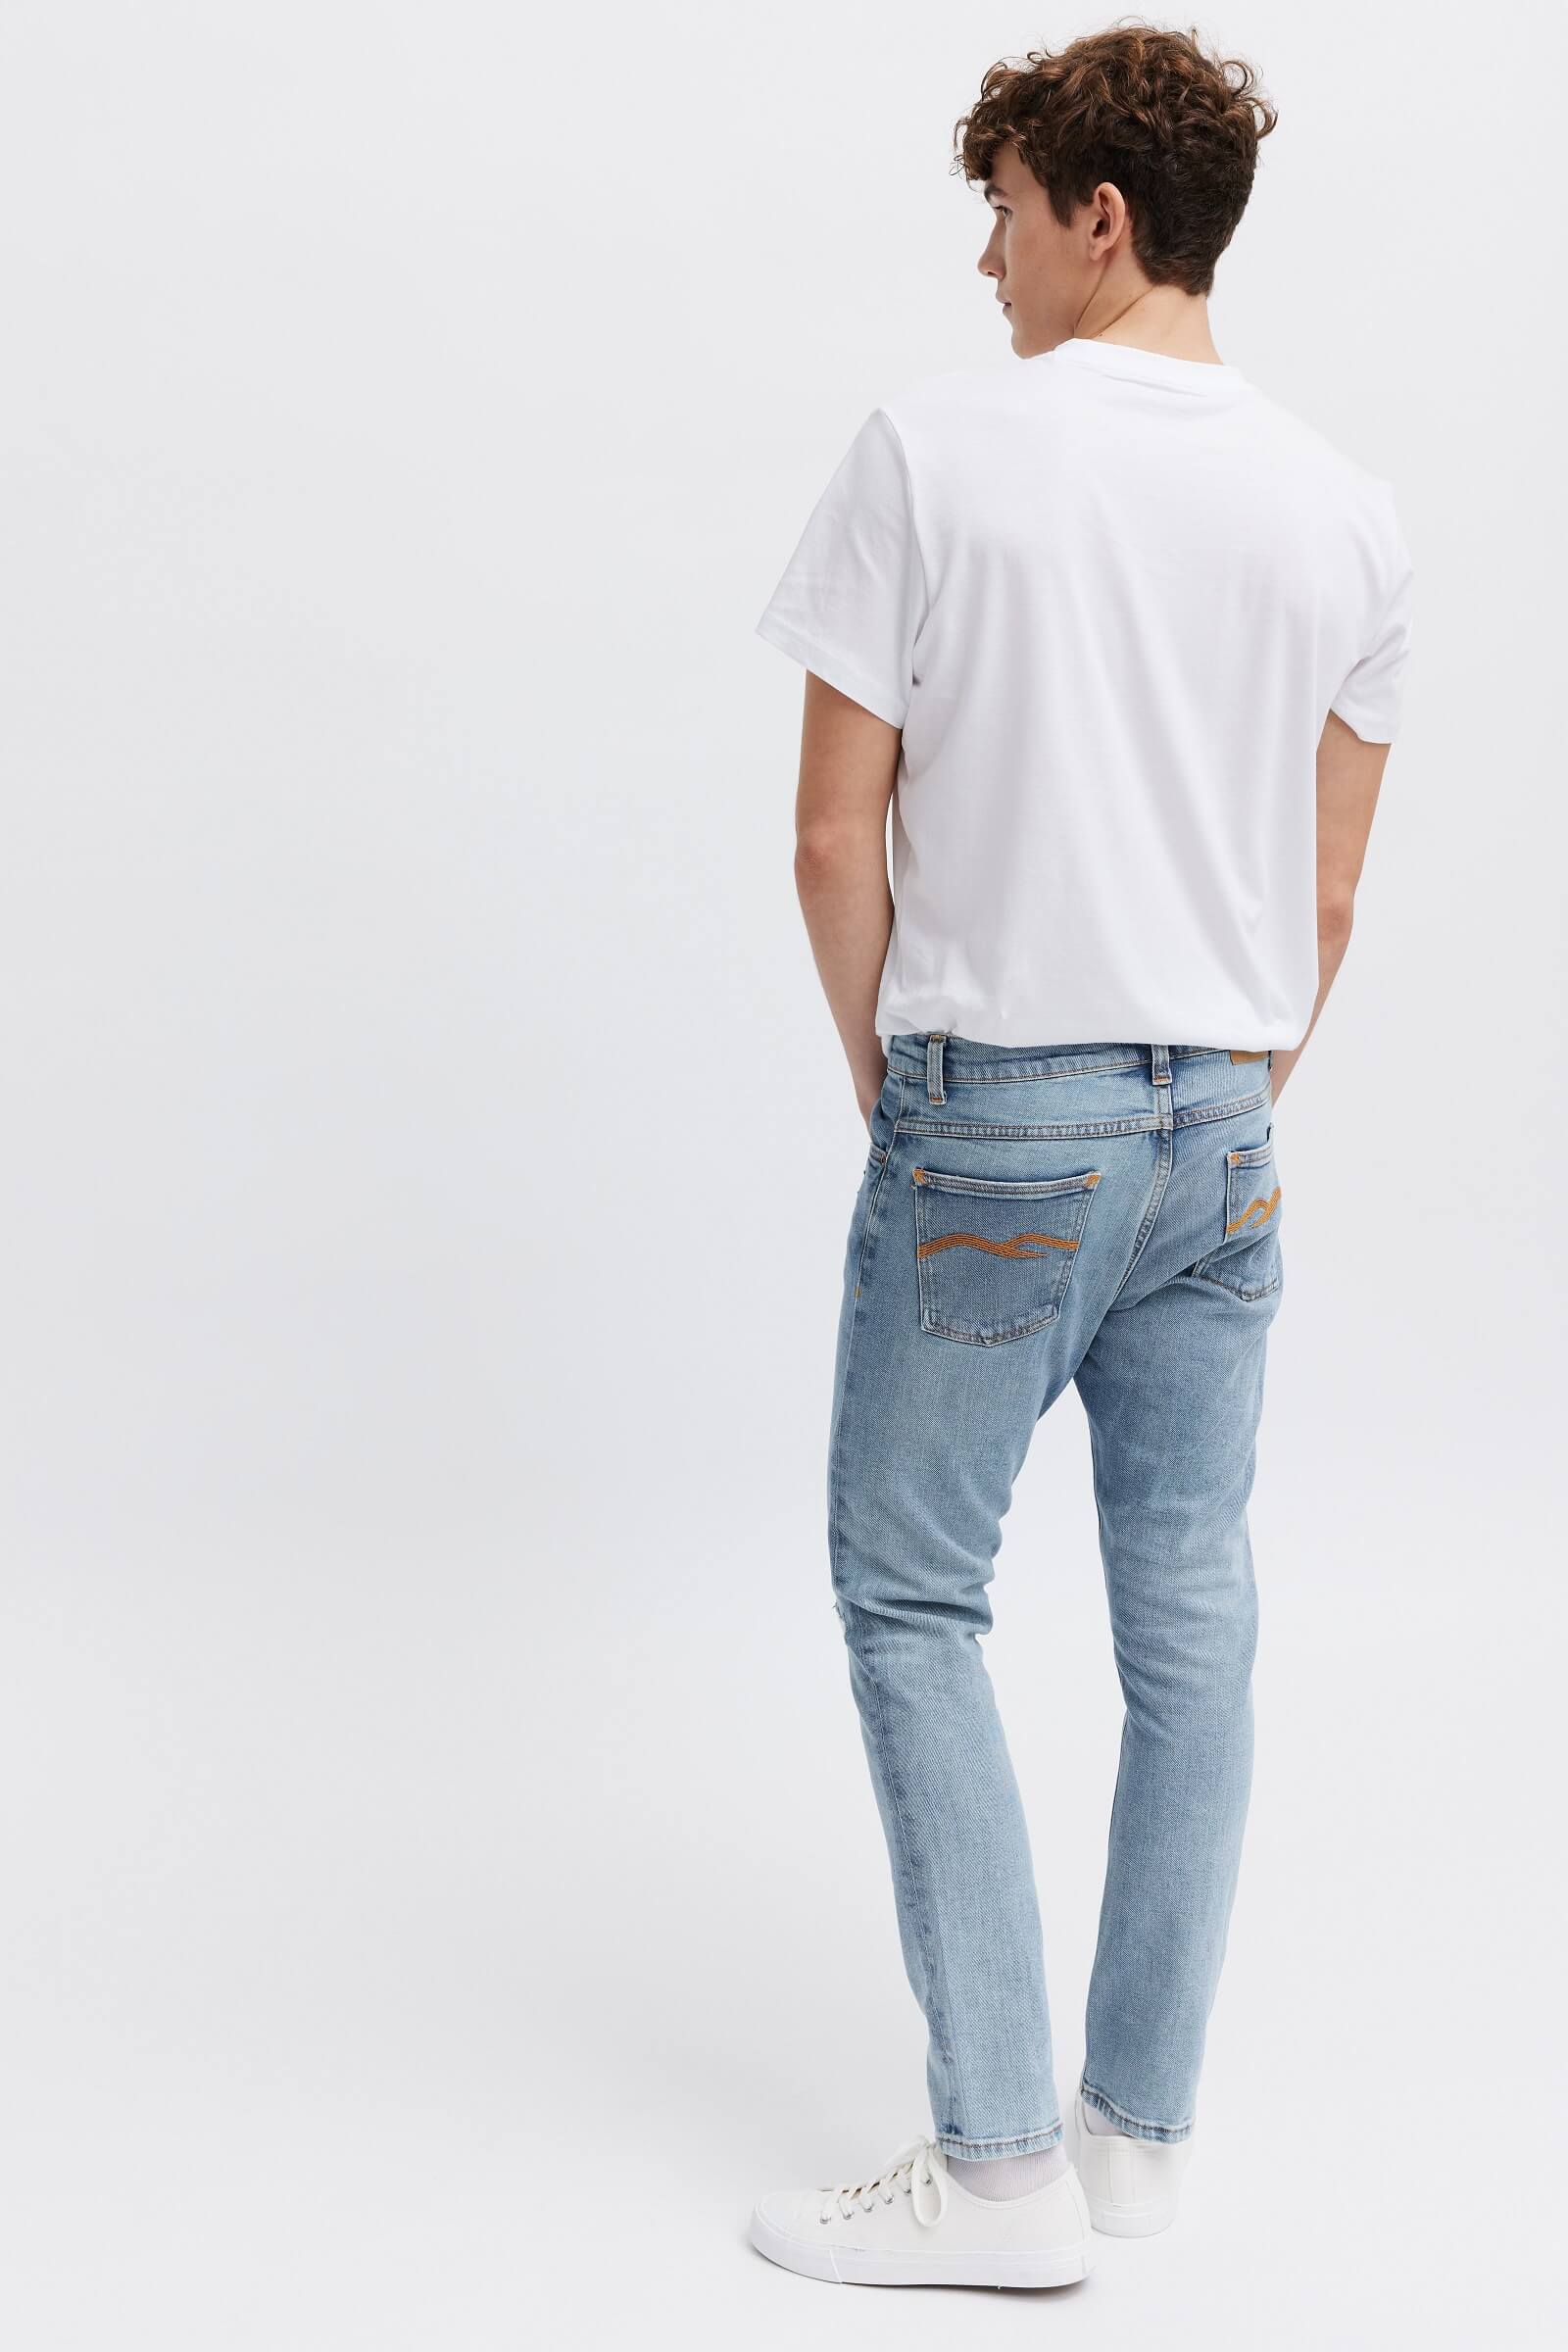 O2 Jeans™, Men's Slim Tapered Fit